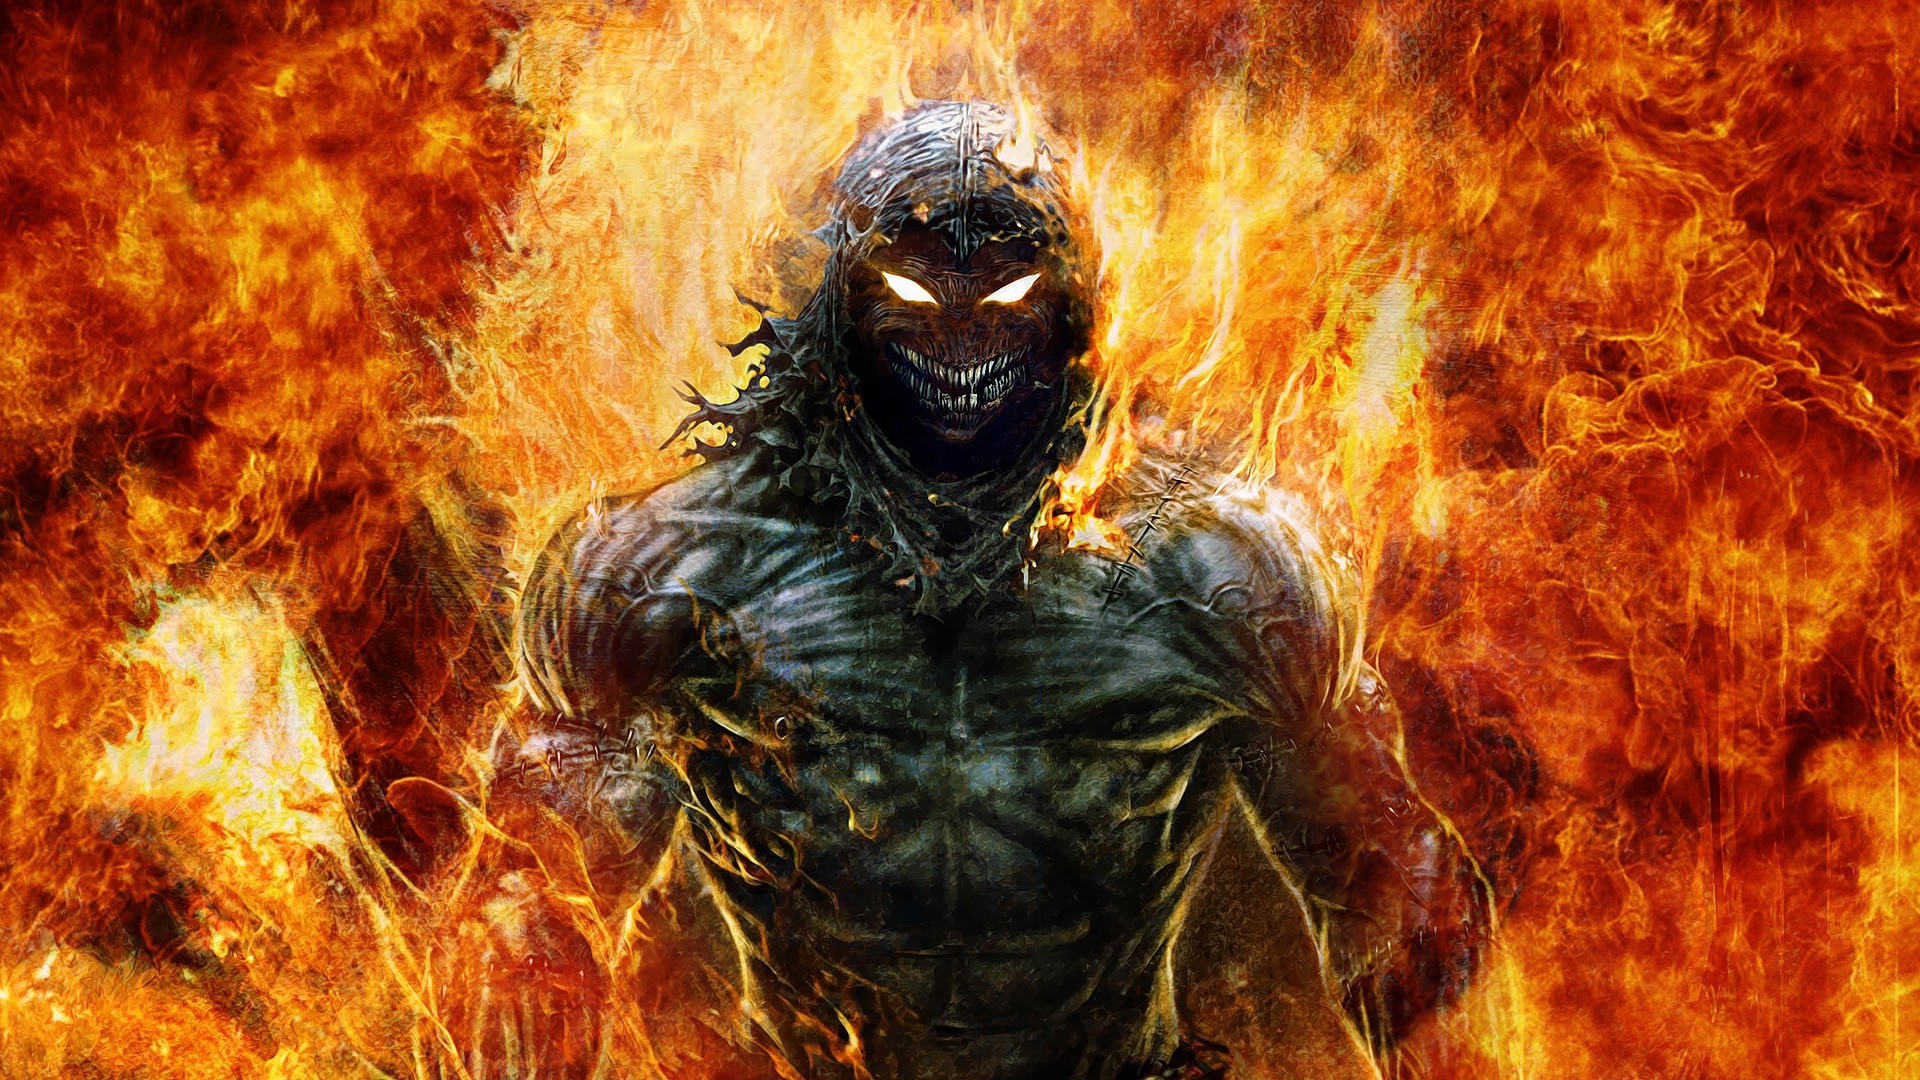 General 1920x1080 artwork Disturbed demon creature fire fantasy art glowing eyes